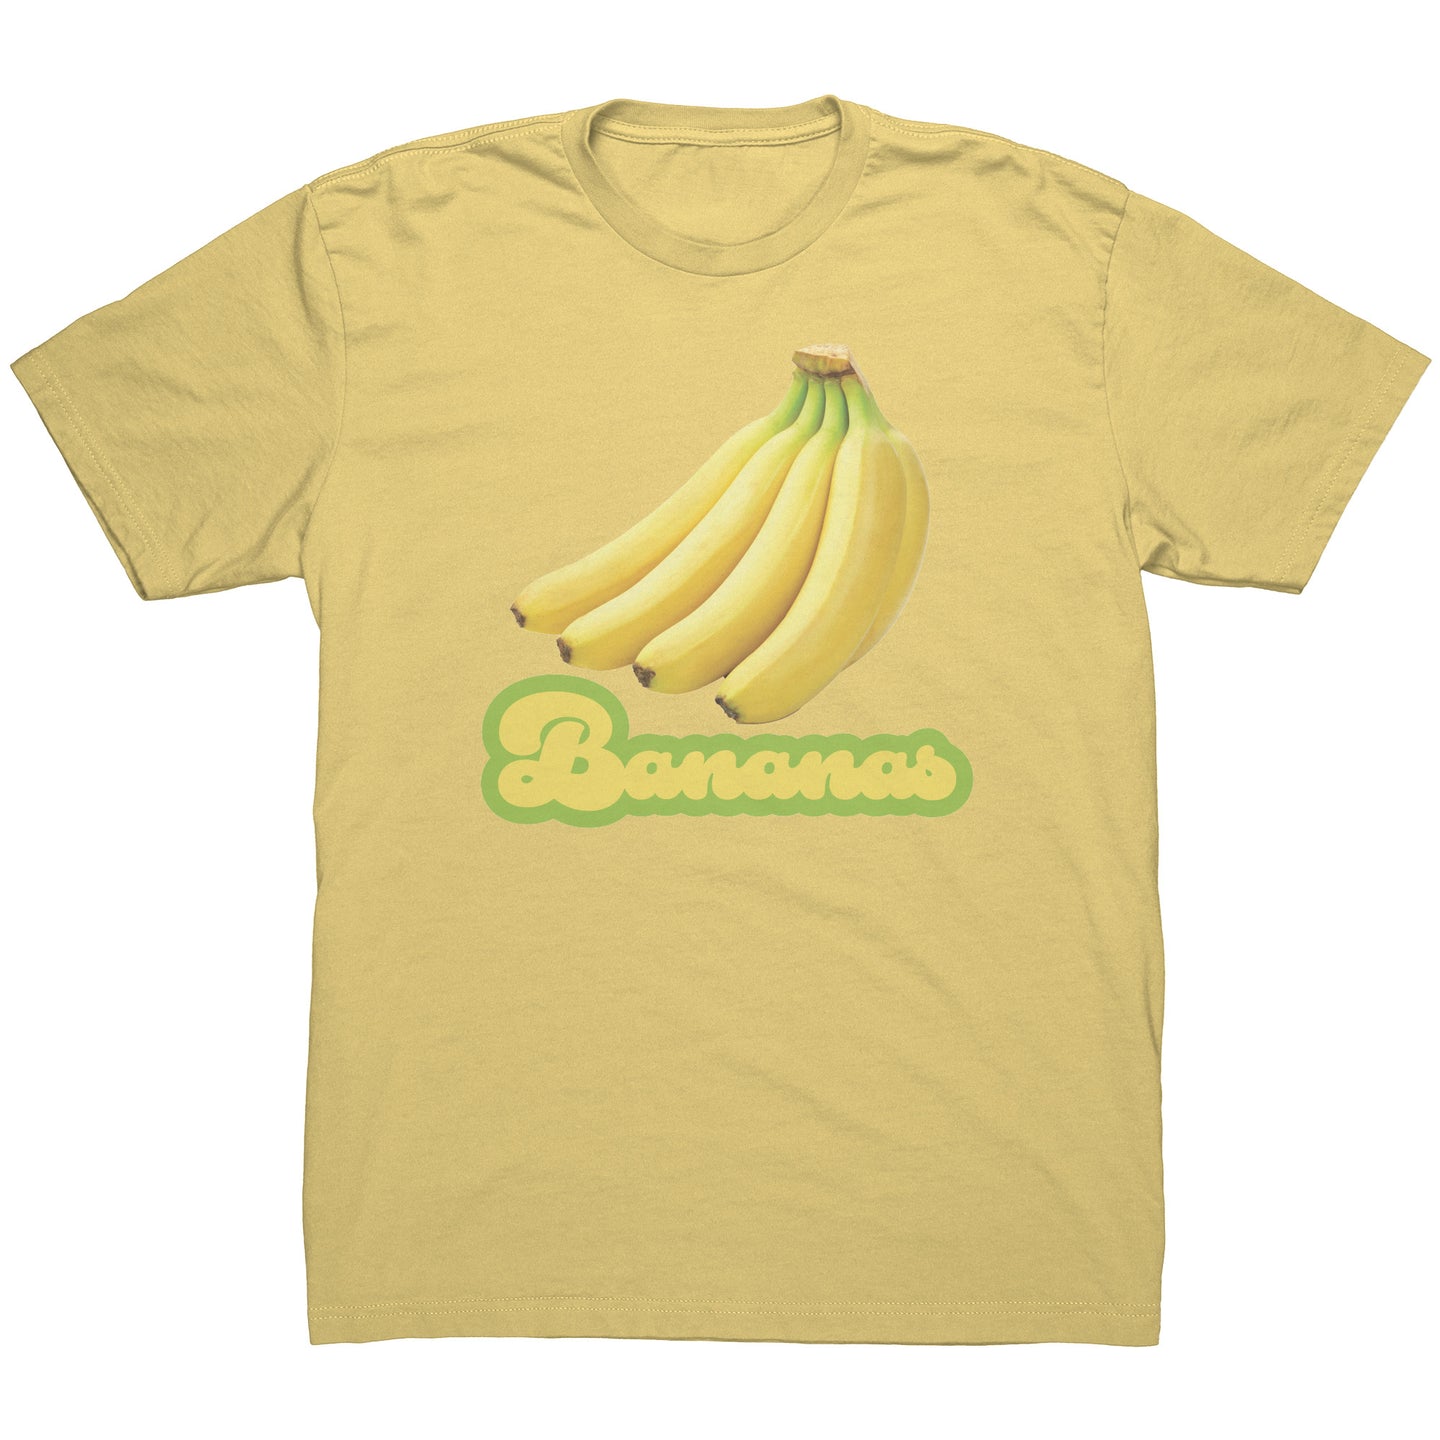 BANANAS! t-shirt